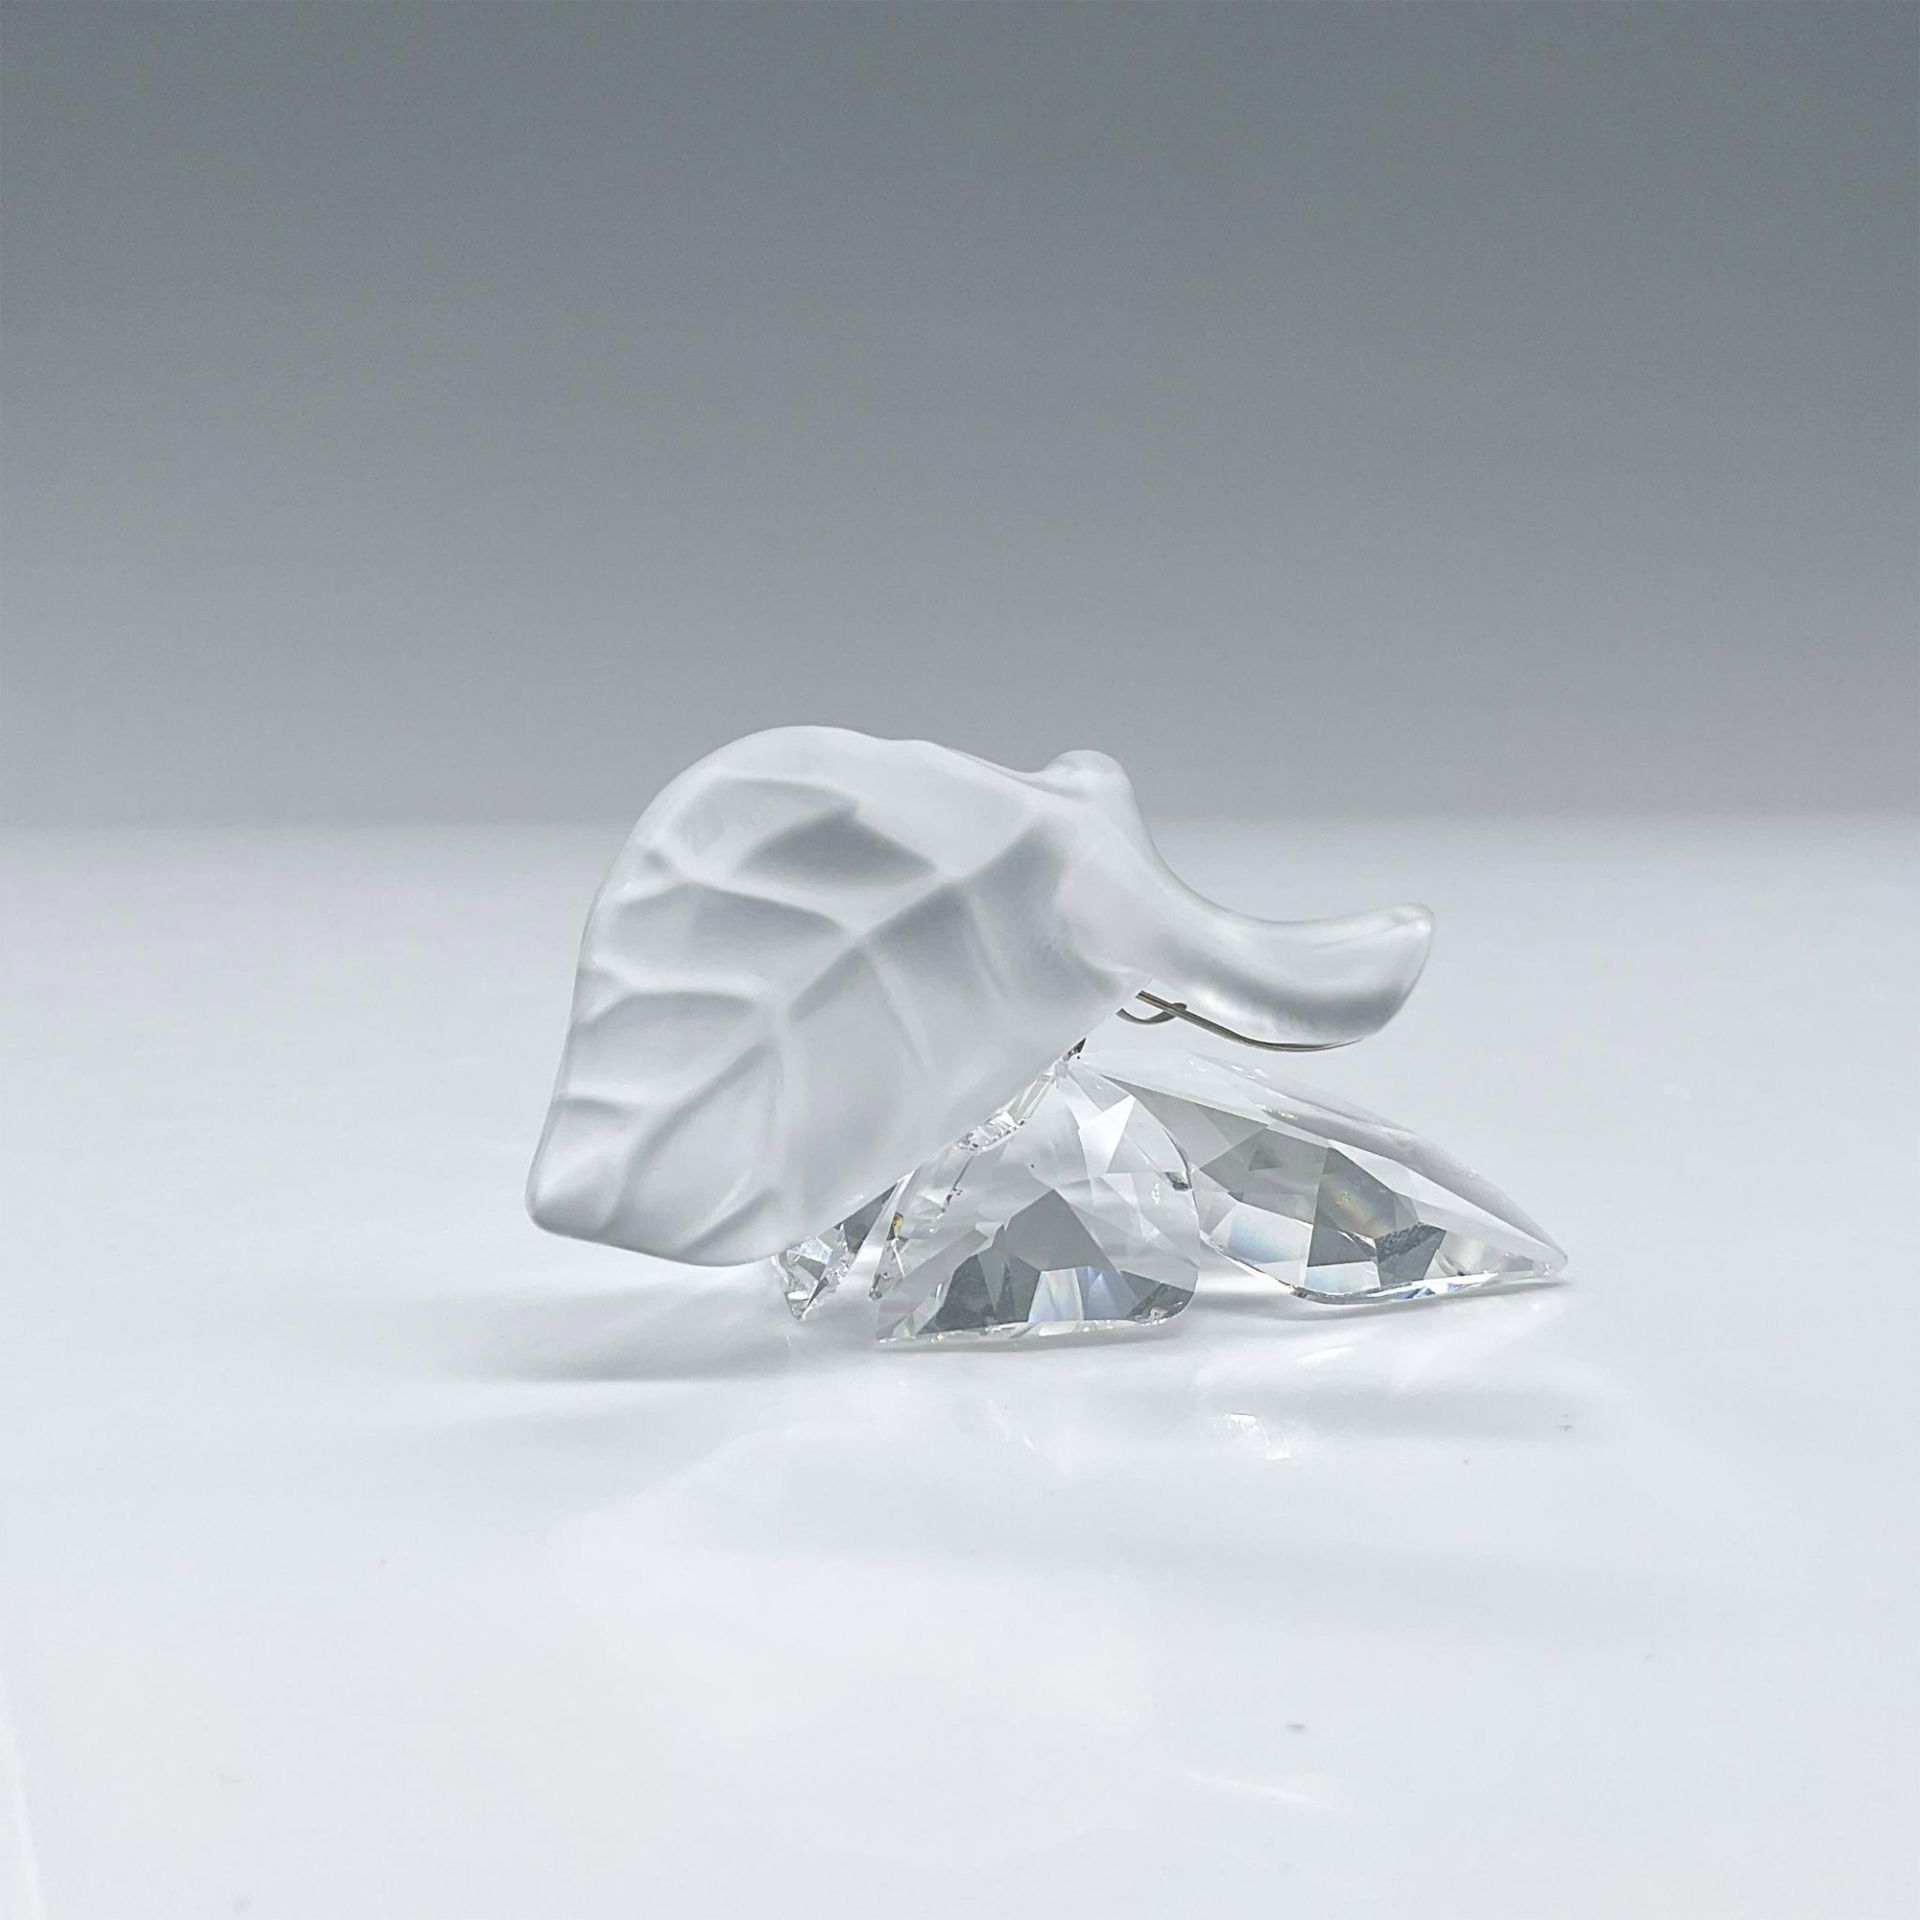 Swarovski Crystal Figurine, Butterfly on Leaf - Image 3 of 4